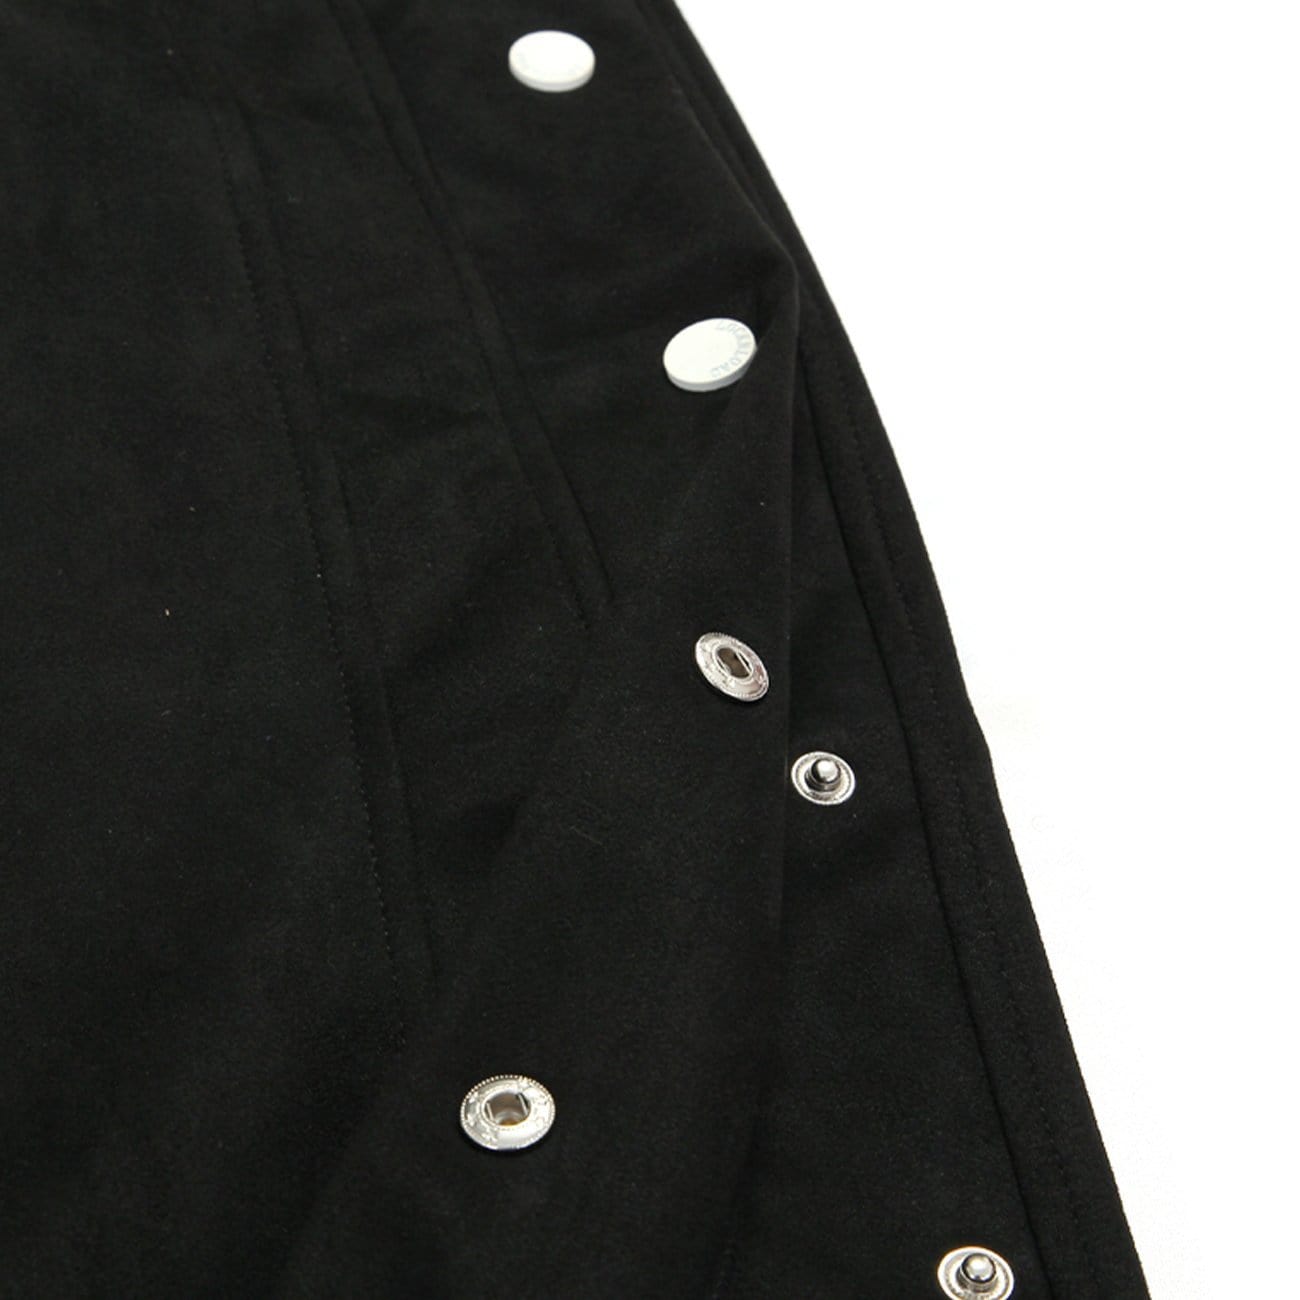 Function Side Multi-button Pants Streetwear Brand Techwear Combat Tactical YUGEN THEORY